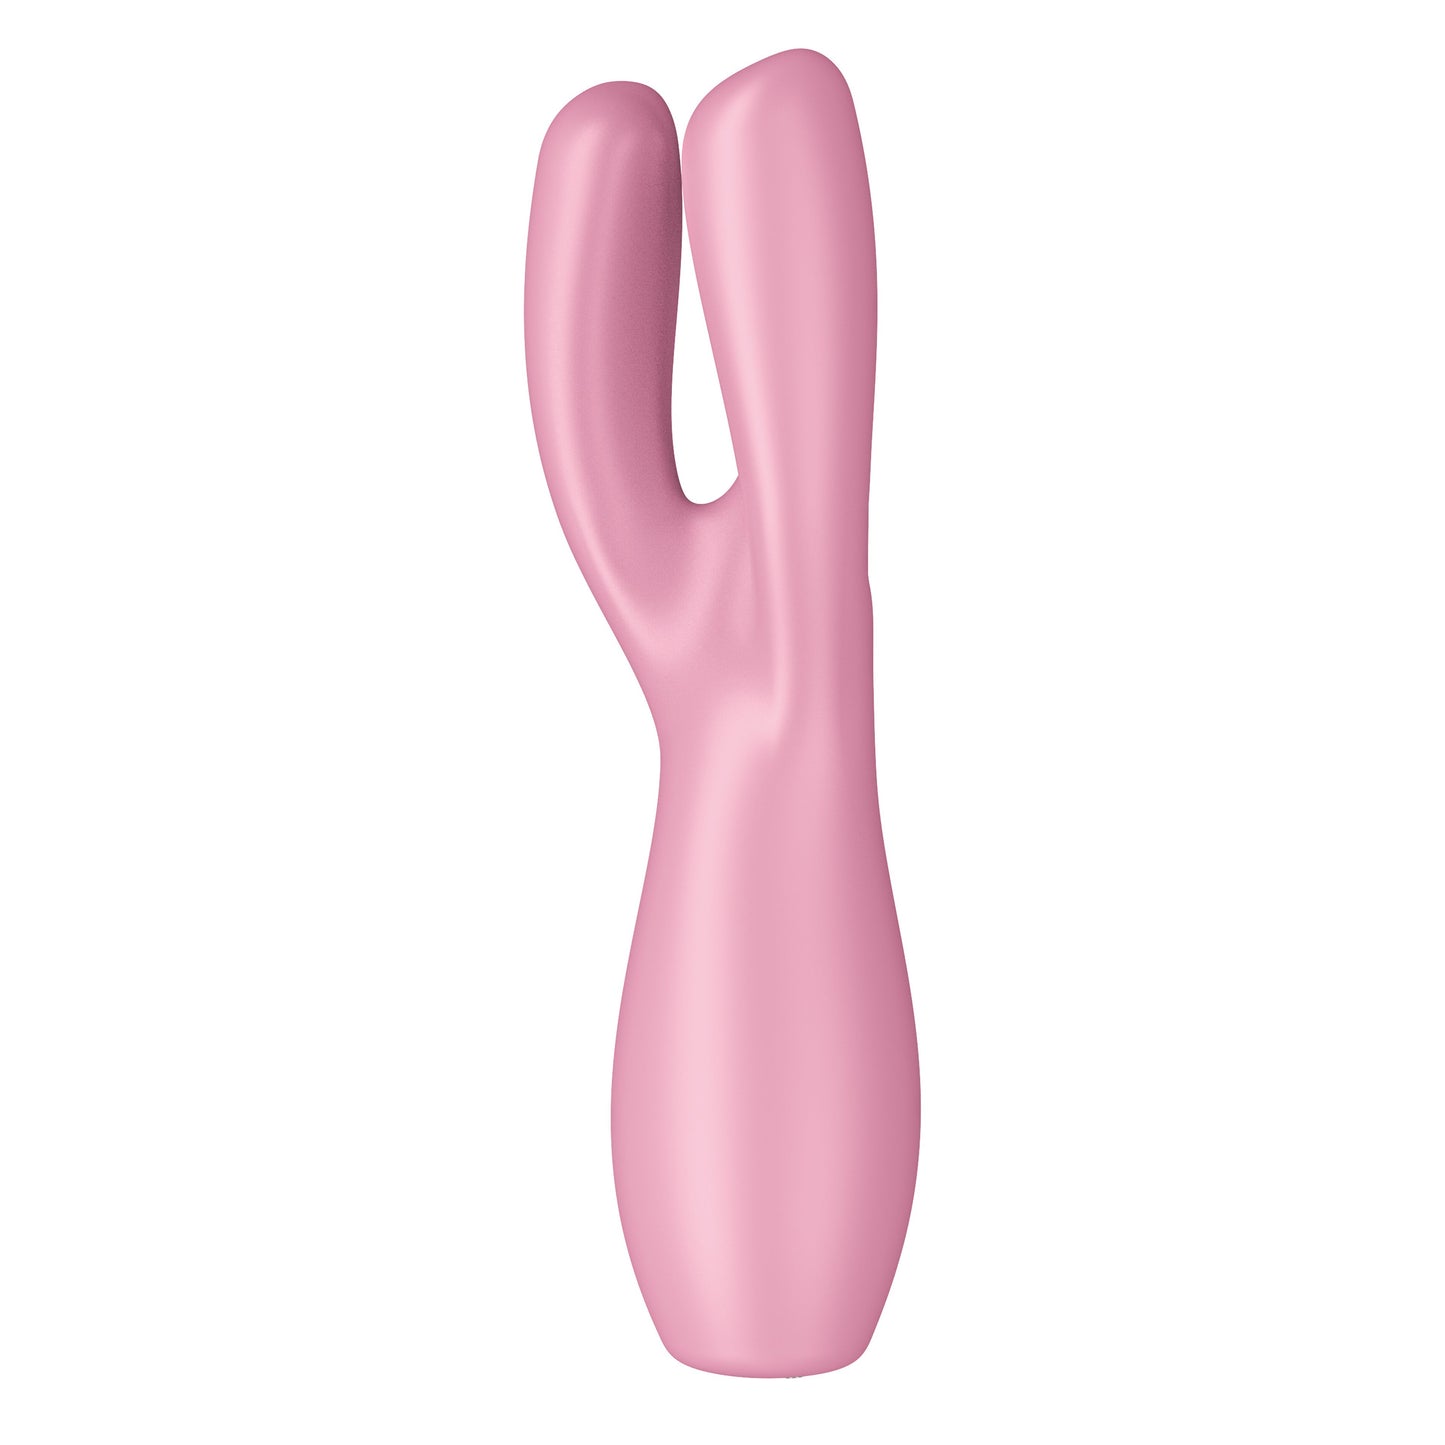 Threesome 3 Vibrator - Pink